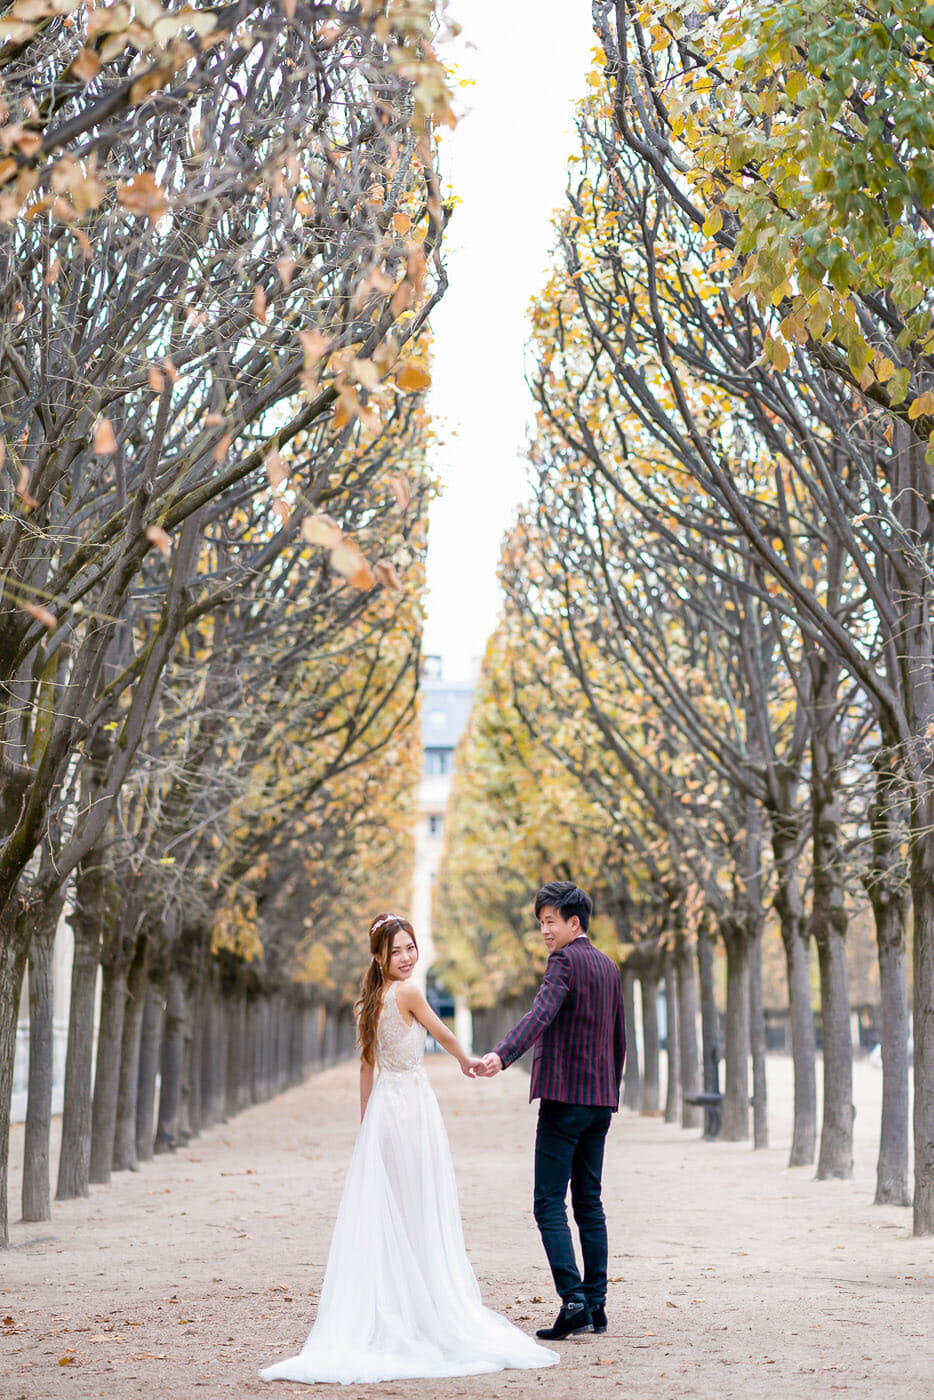 Beautiful pre-wedding pictures at Palais Royal Paris